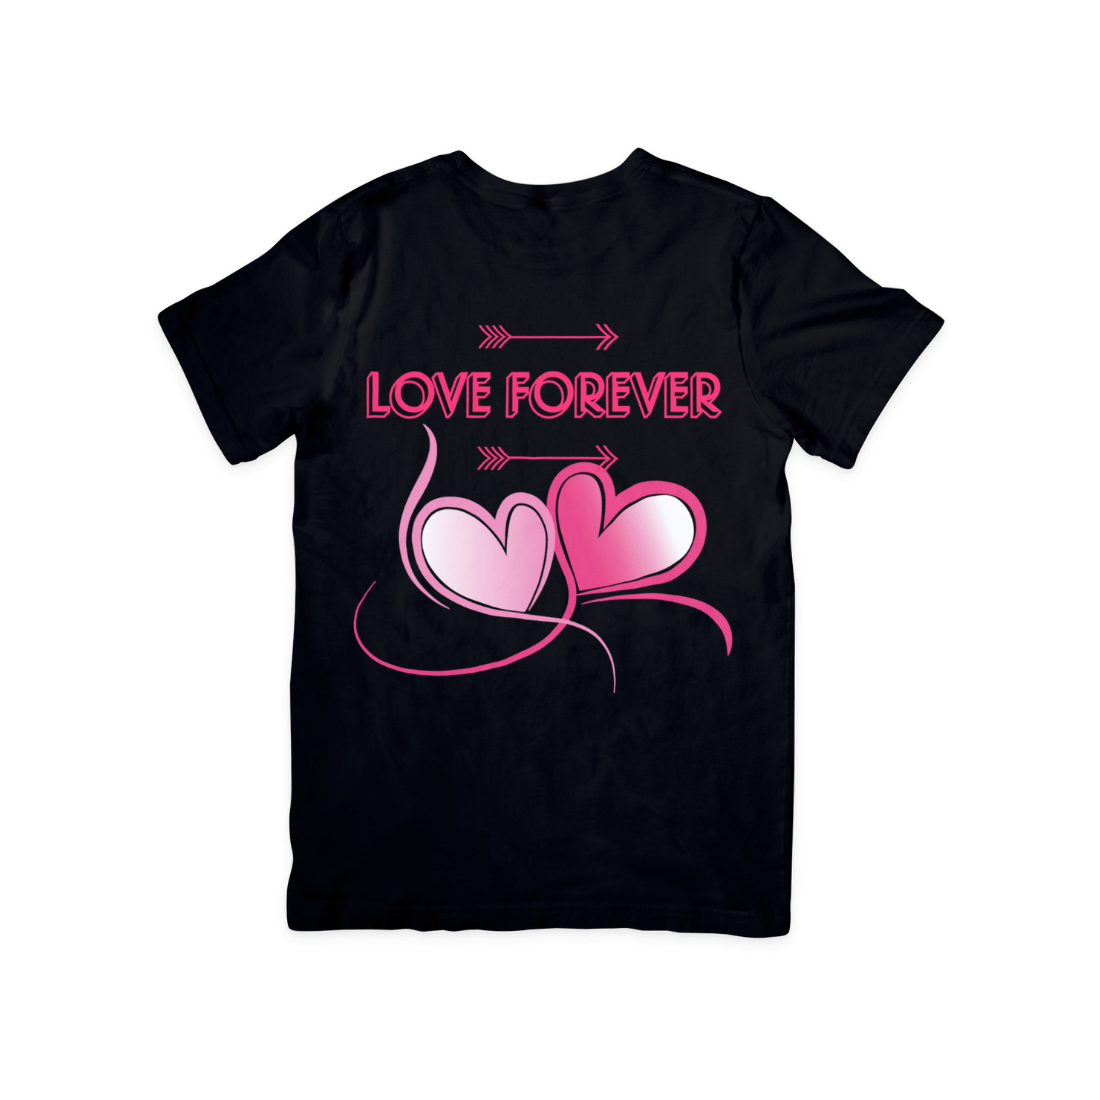 Love T-shirt Design Bundles | Love Forever T-shirt Design Bundles preview image.